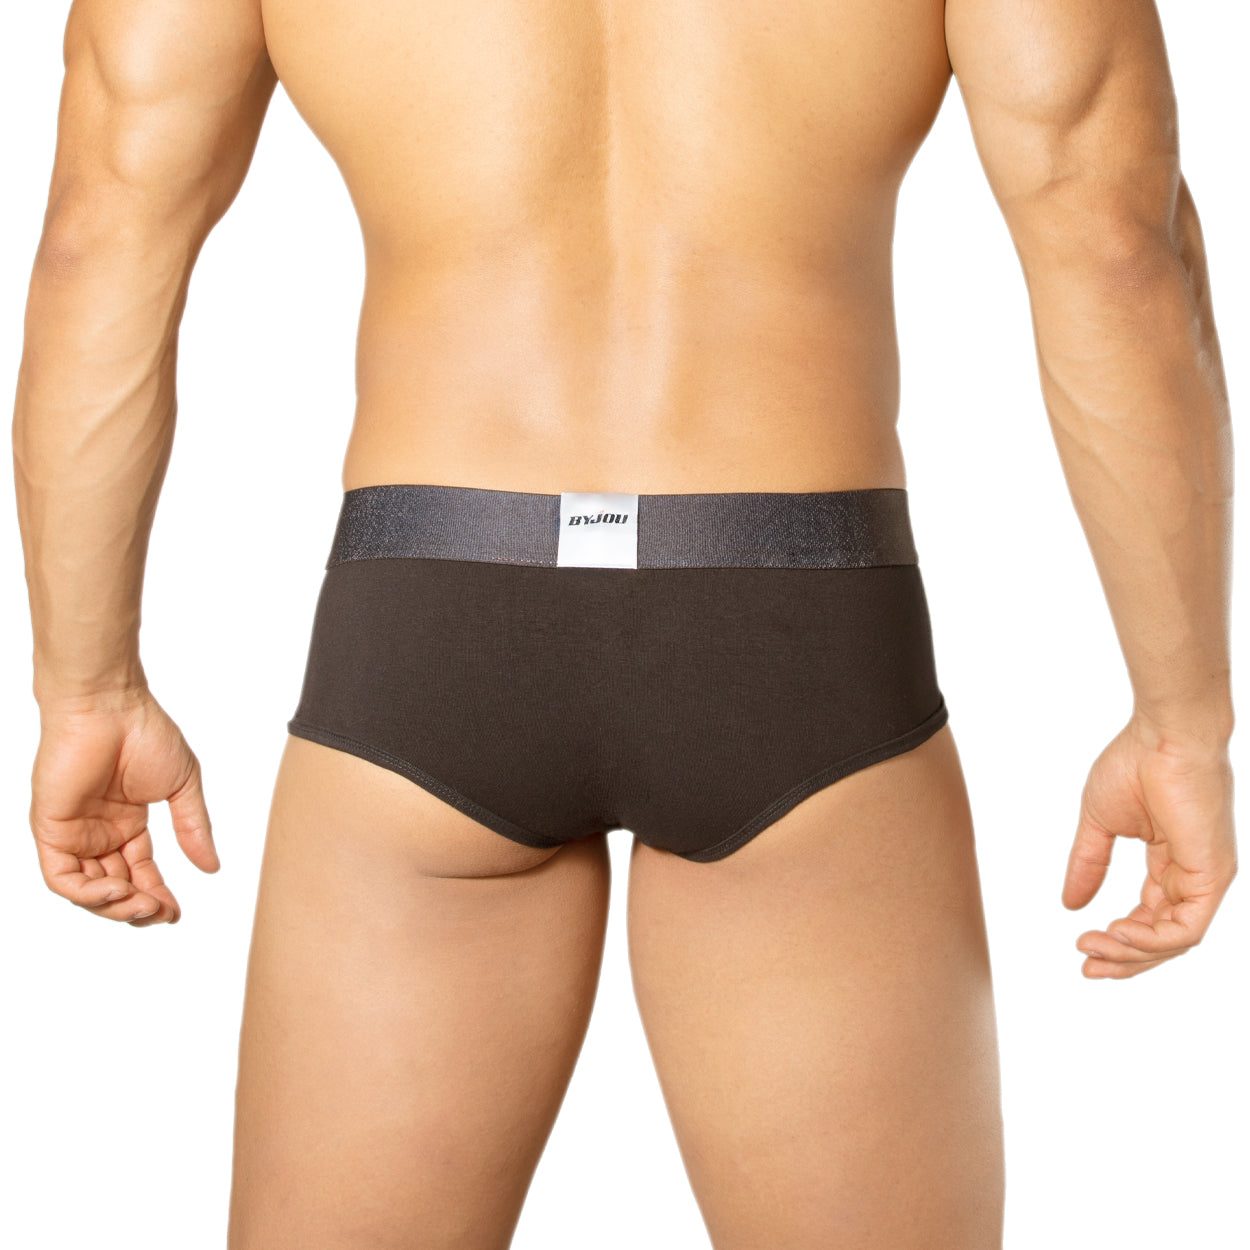 Boxer Brief Men Andy  Byjou Underwear Calzon BANMX145